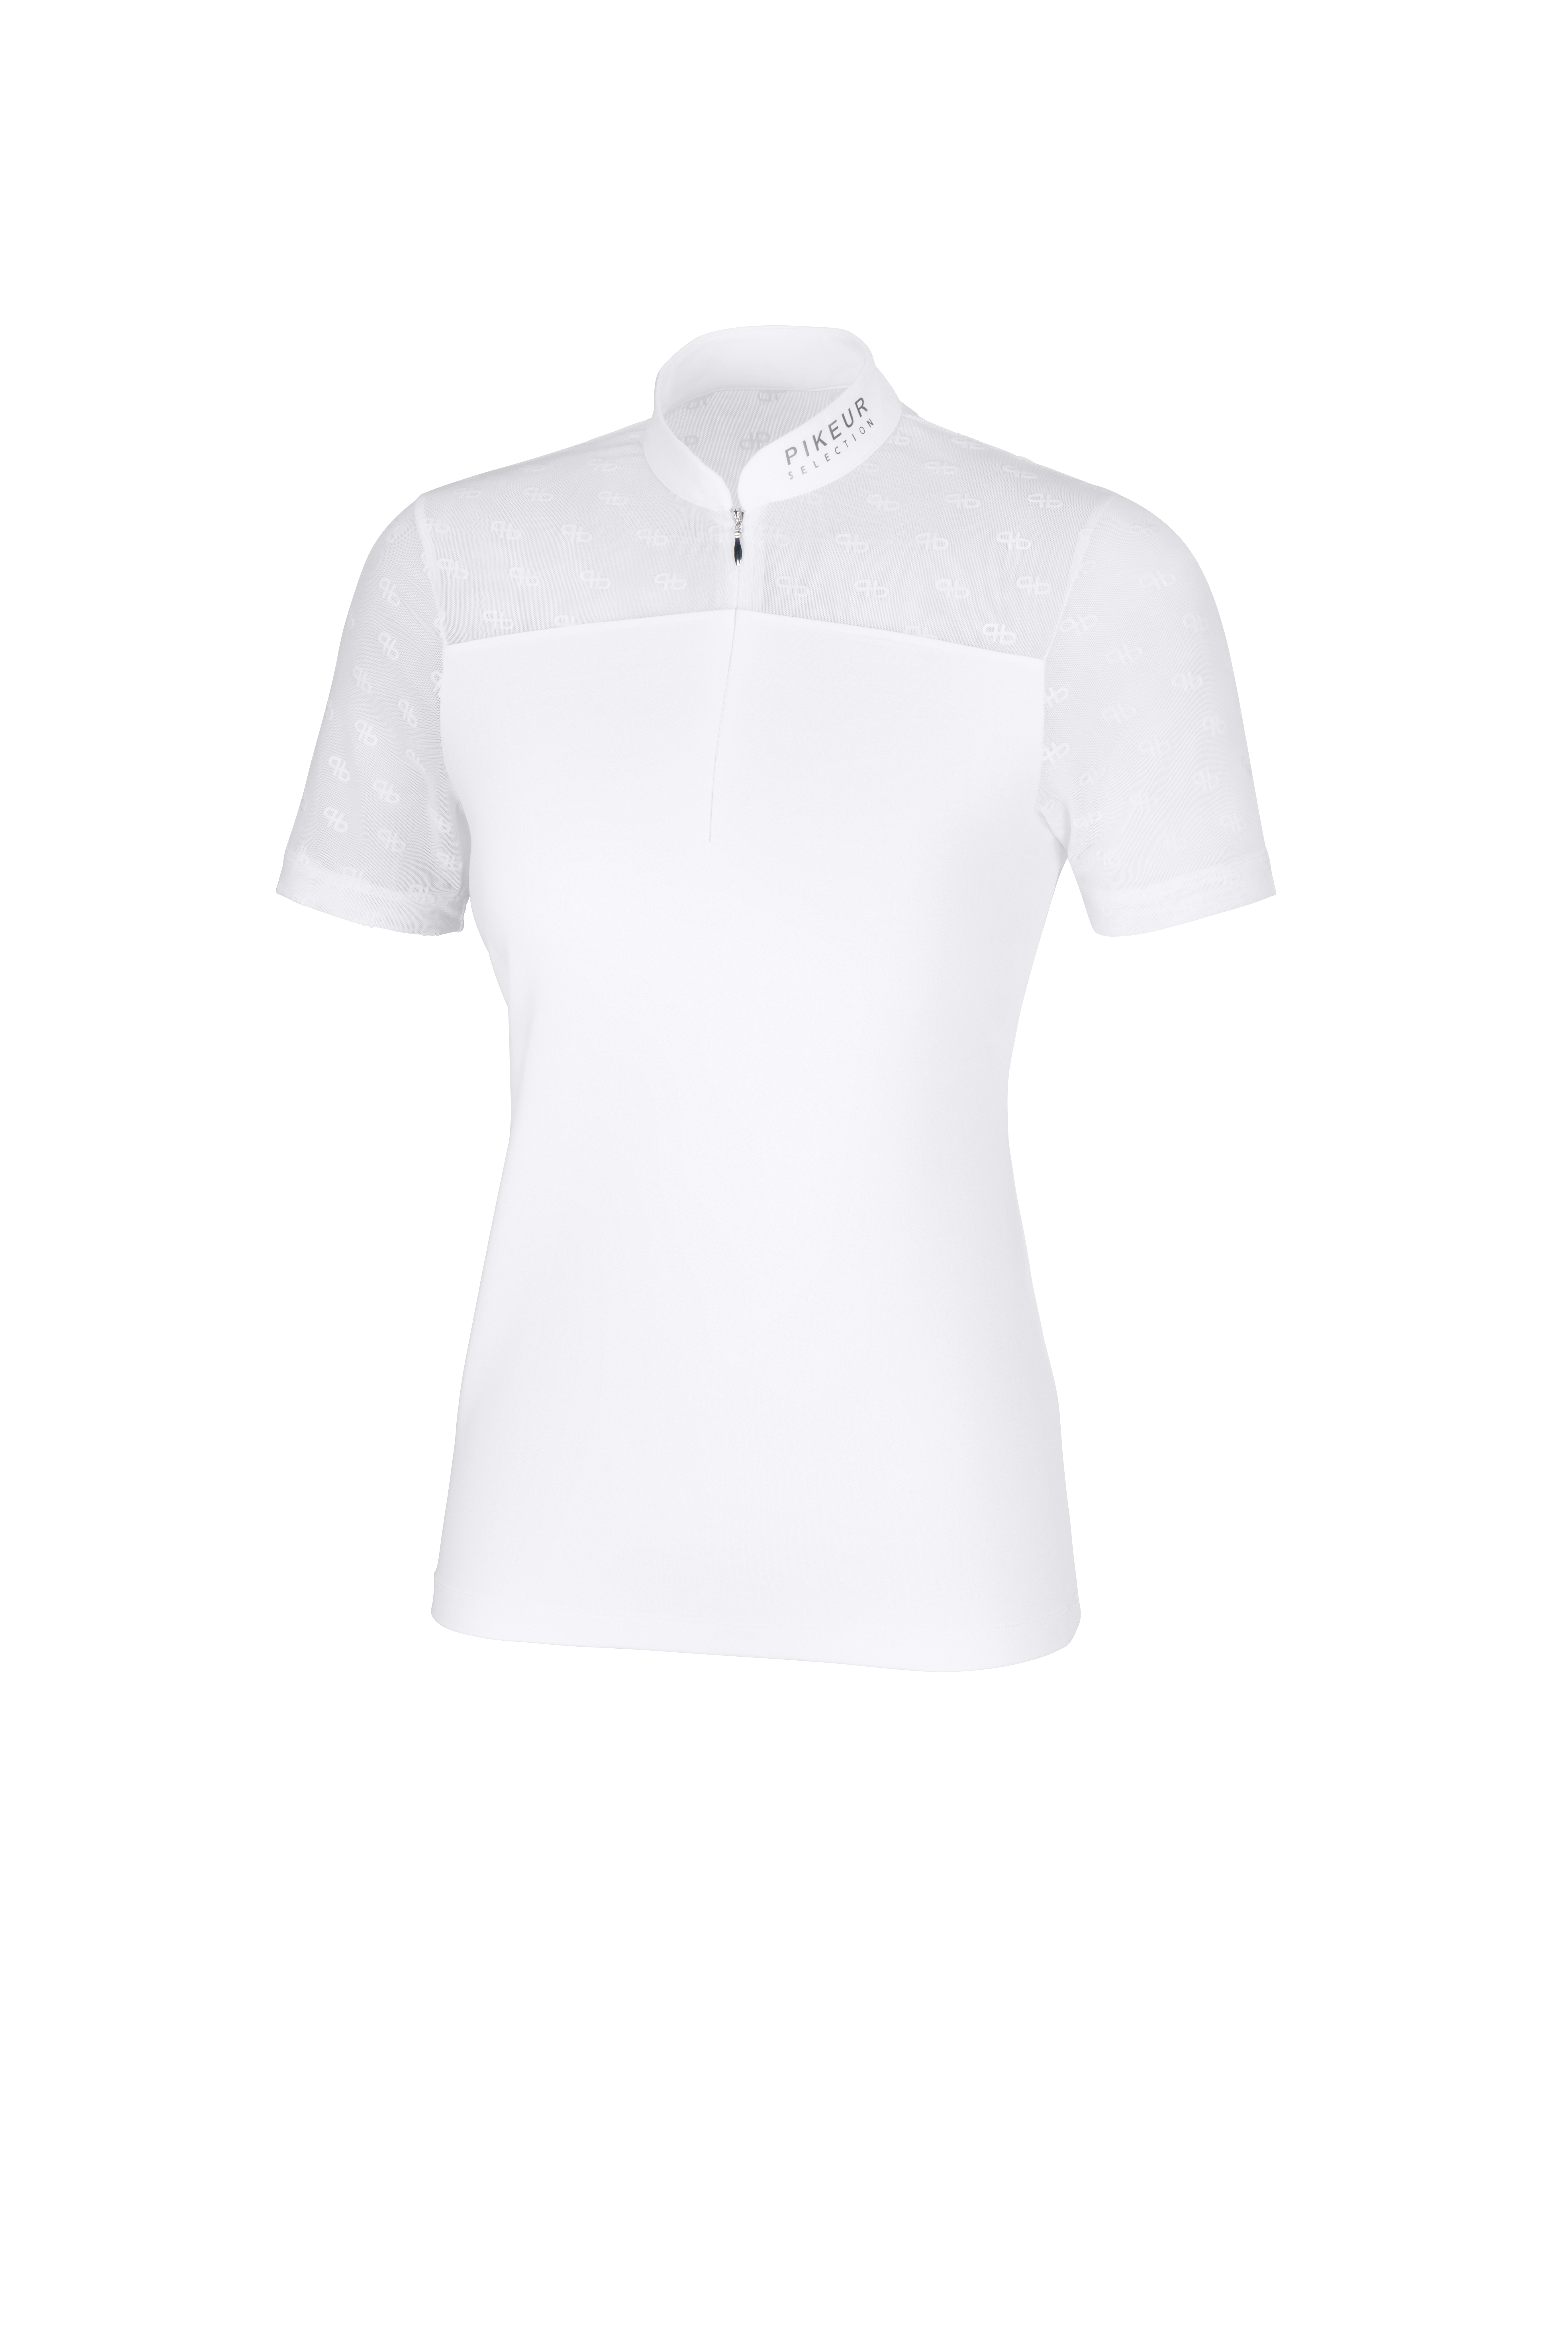 Pikeur FS24 Damen Zipp Shirt 5213 Selection